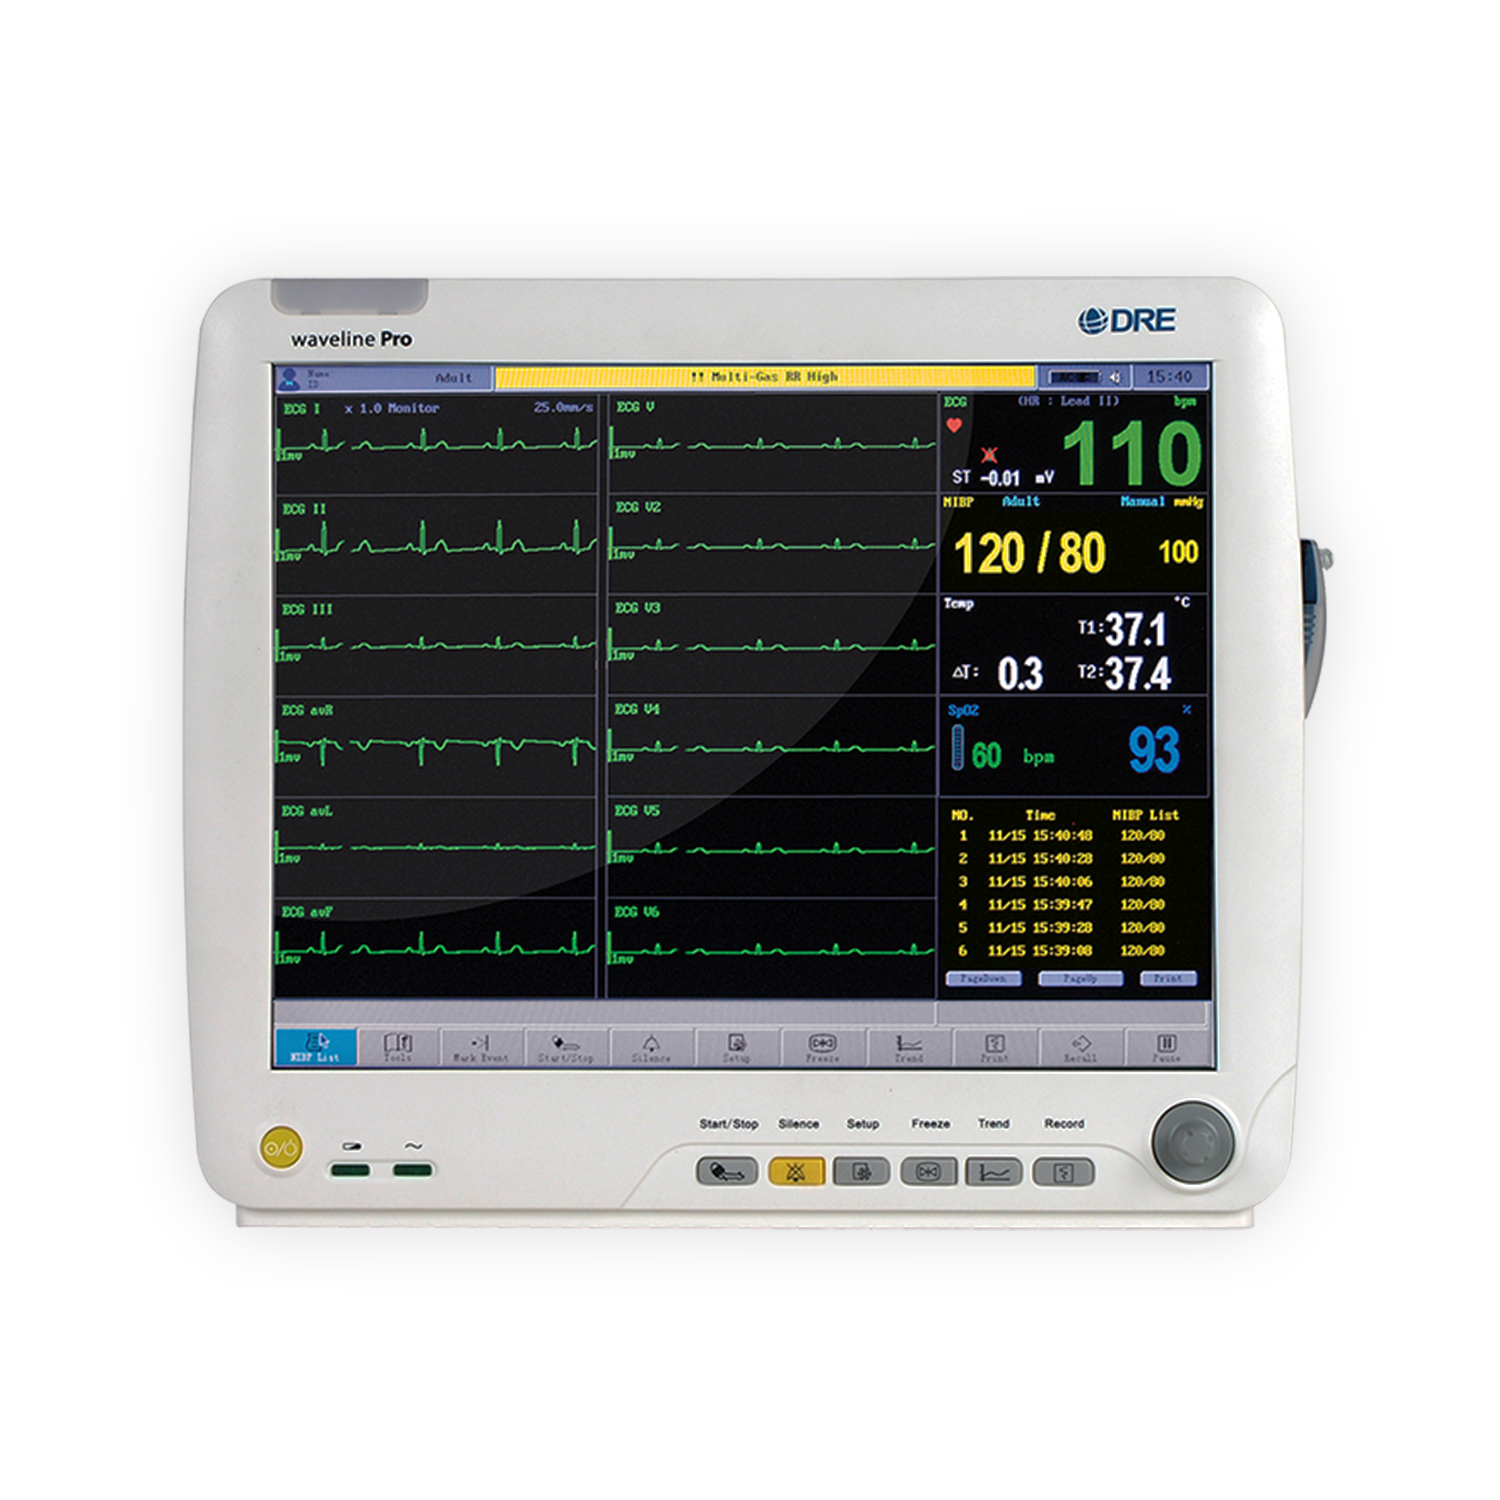 DRE Waveline Pro Anesthesia Monitor